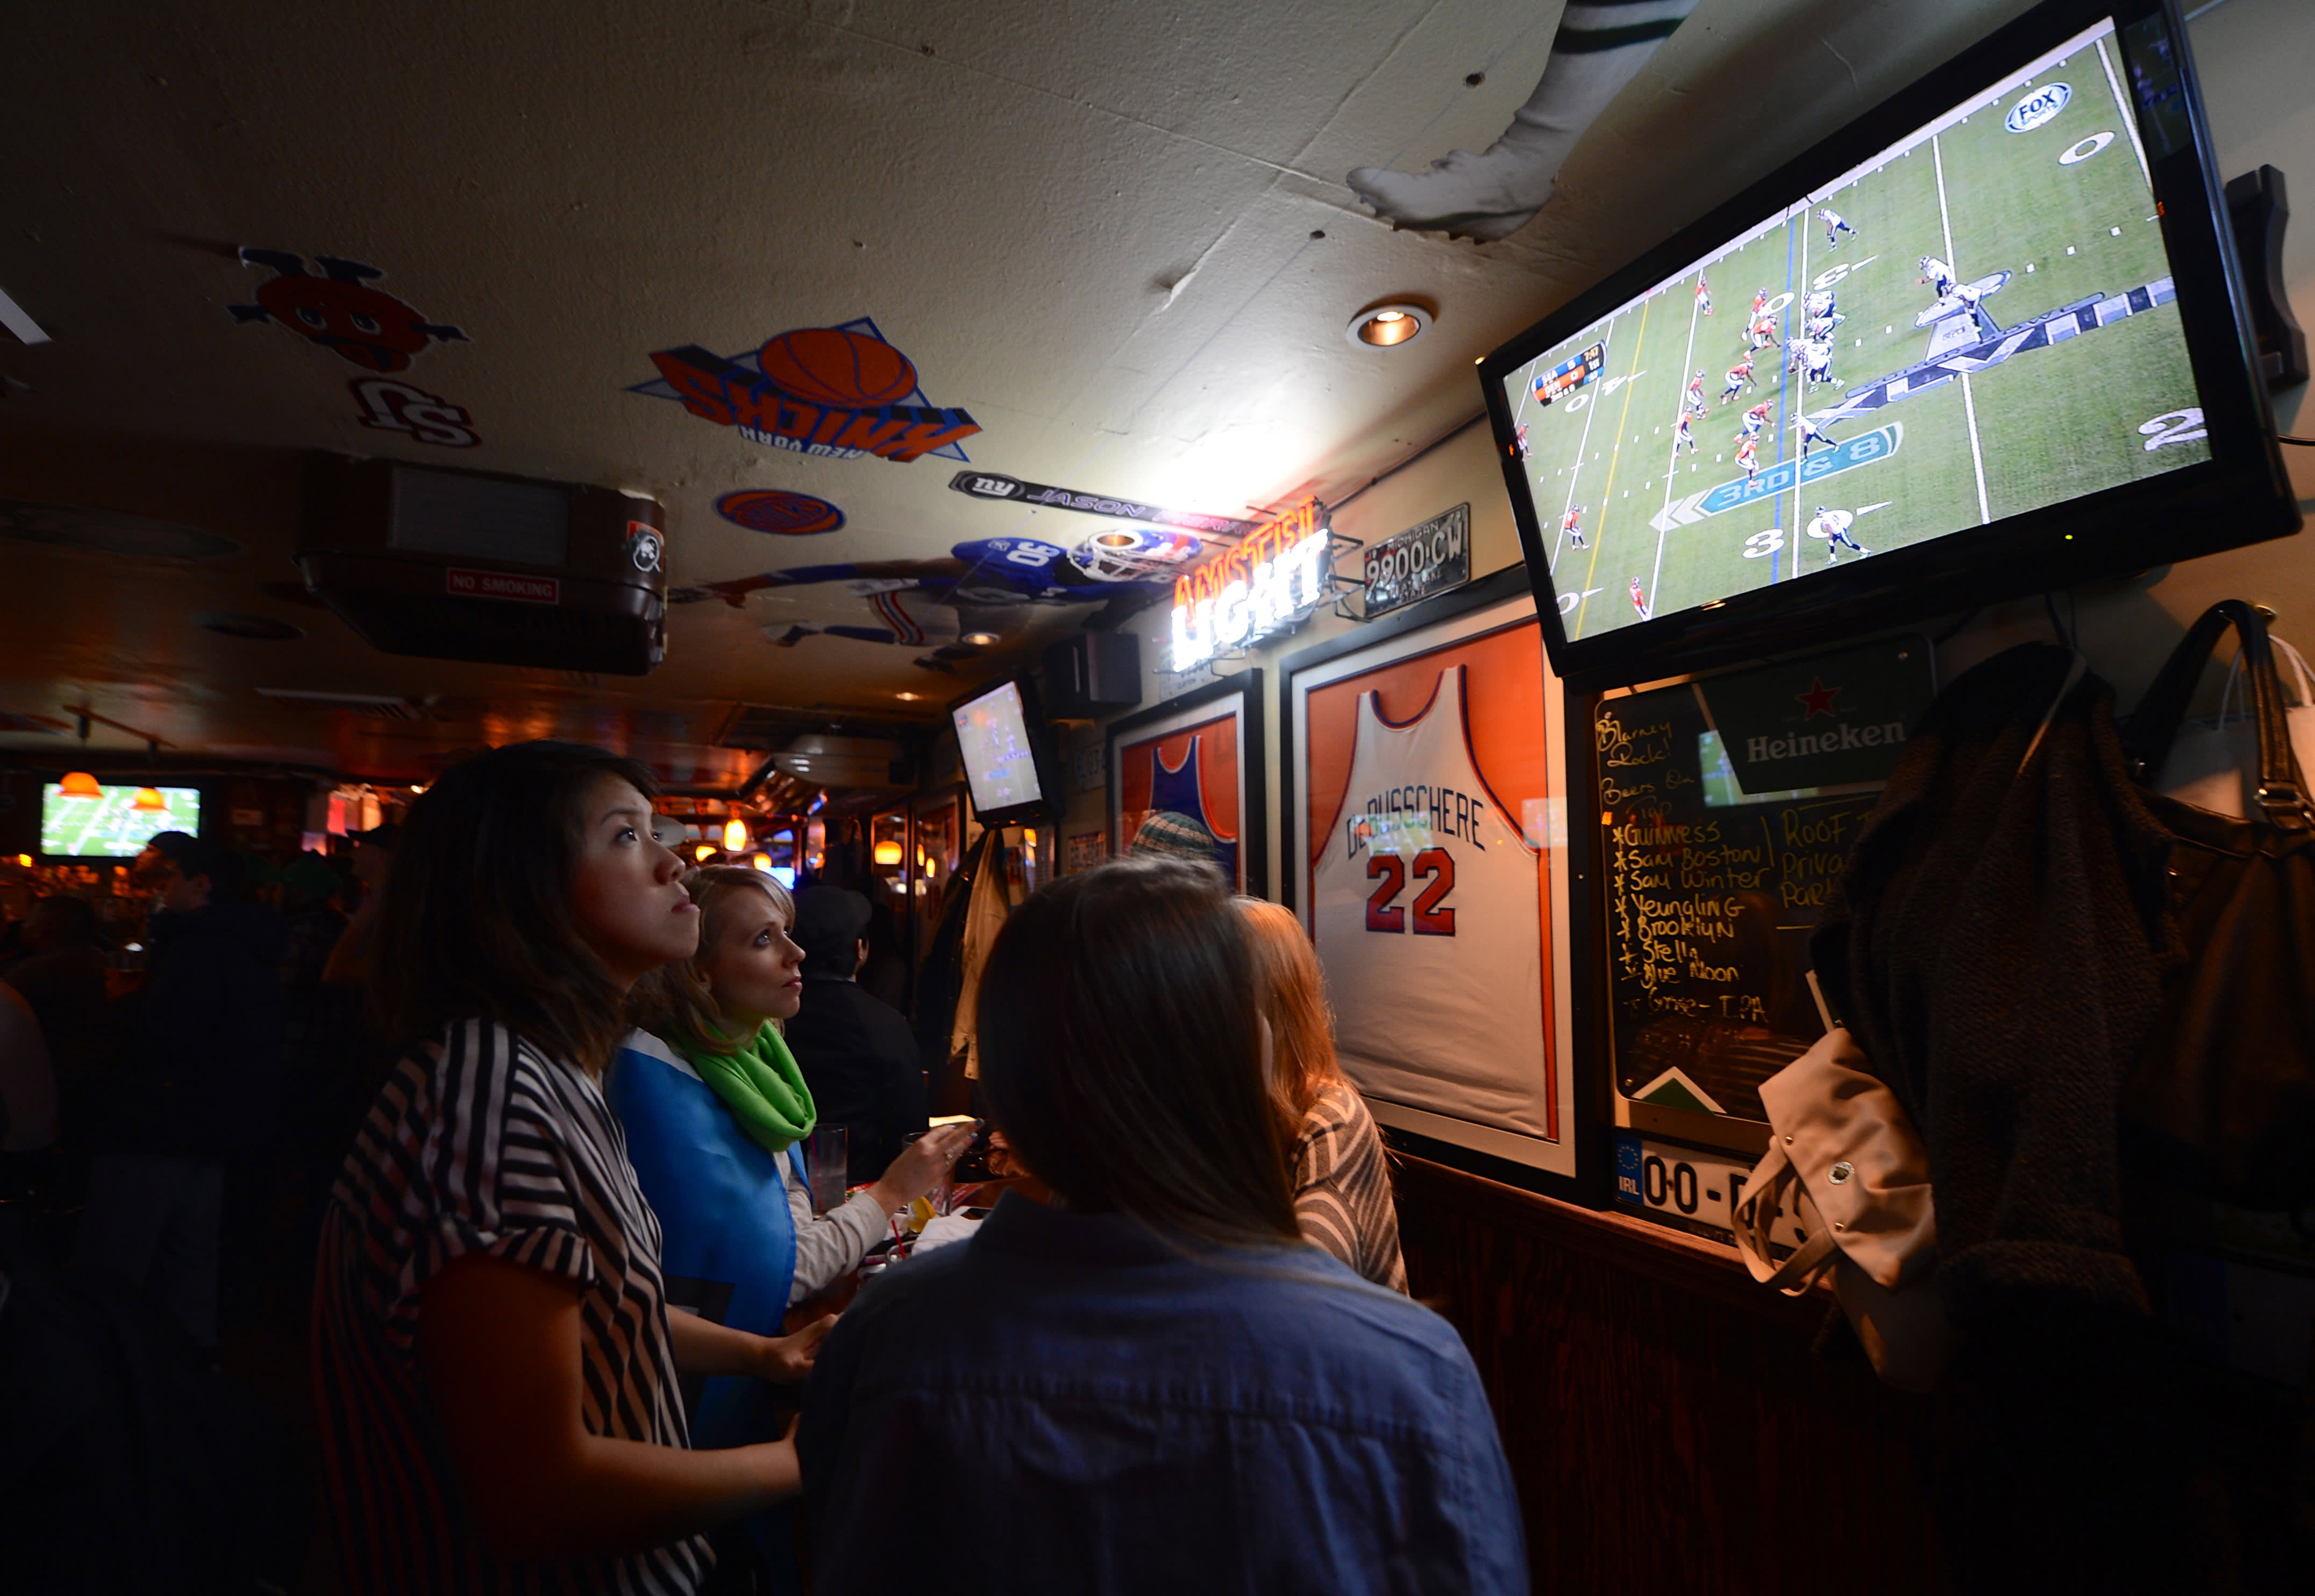 DirecTV to be NFL Sunday Ticket provider for bars, restaurants